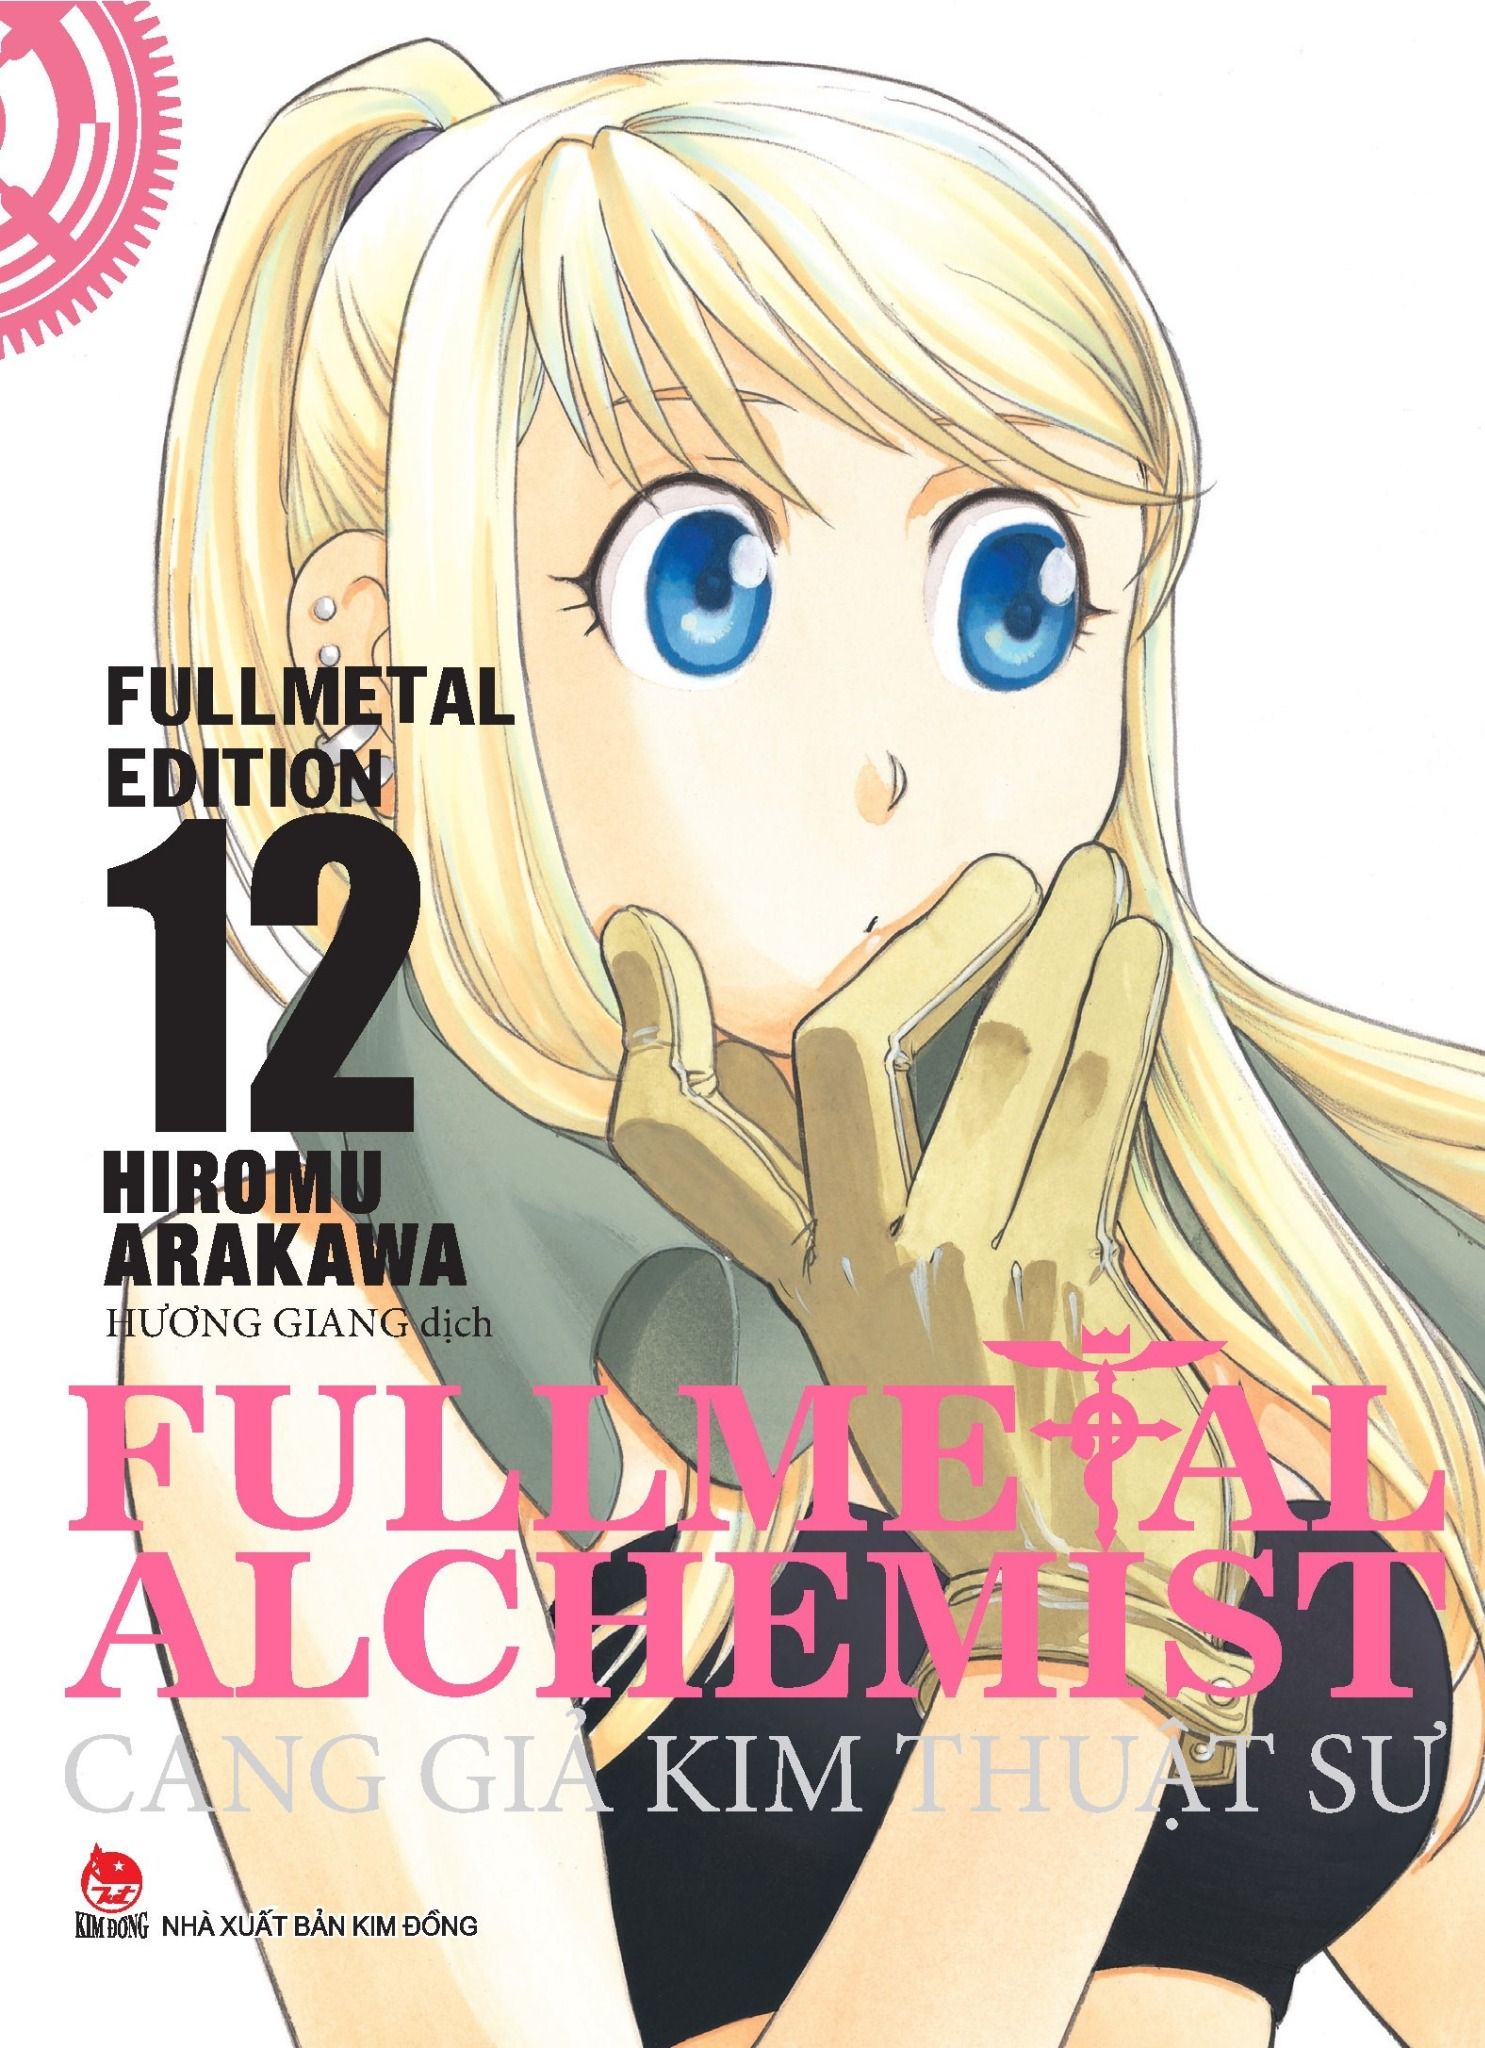  Fullmetal Alchemist - Cang Giả Kim Thuật Sư - Fullmetal Edition - Tập 12 